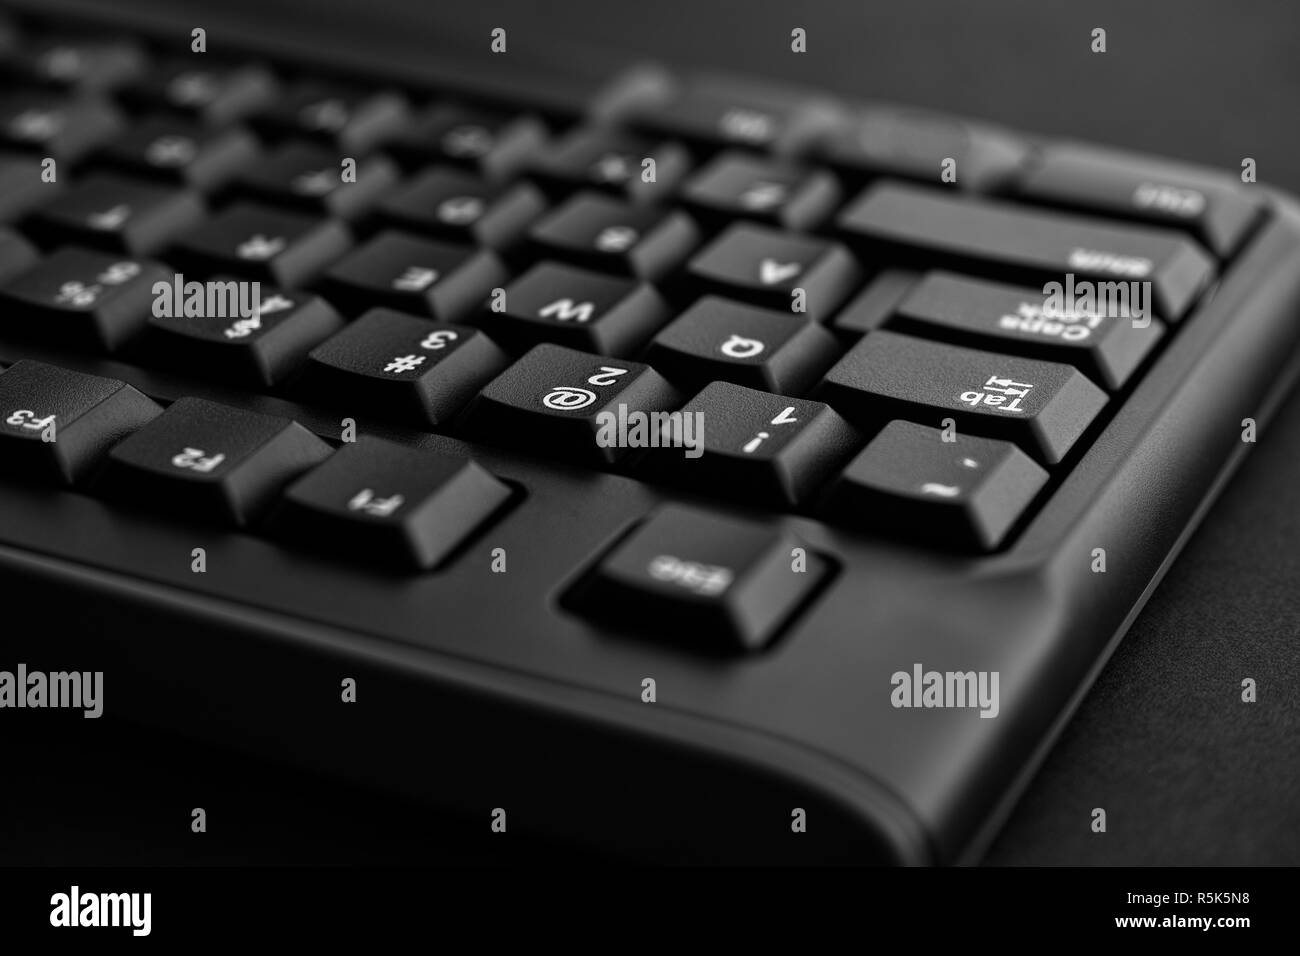 Black keyboard on a black background. Close up. Stock Photo